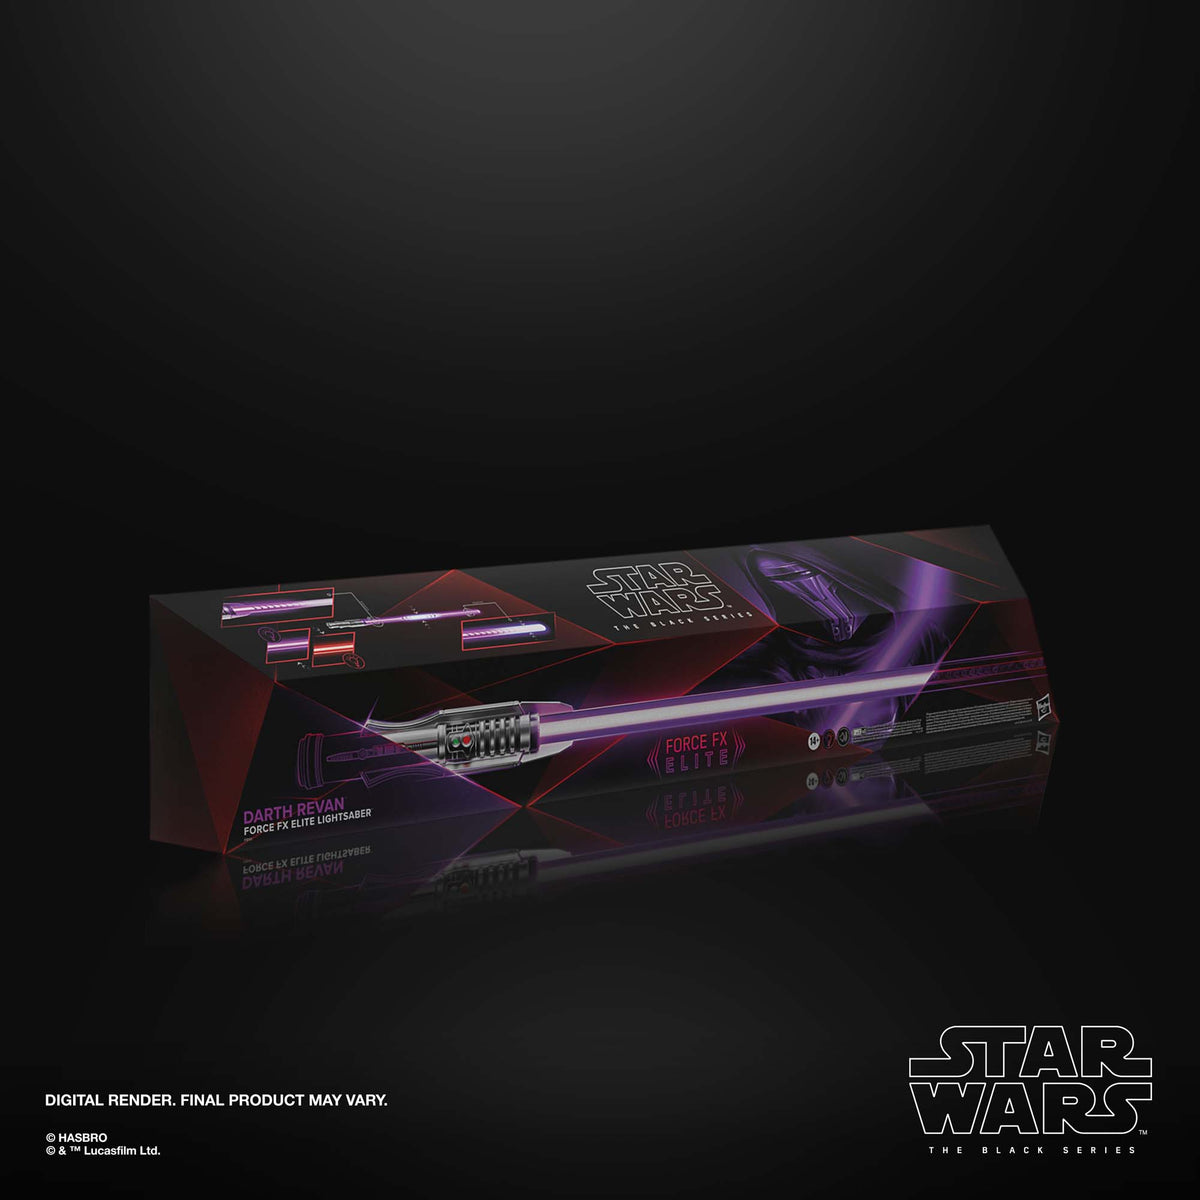 Star Wars Knights of the Old Republic Black Series réplique sabre laser  Force FX Elite Darth Revan